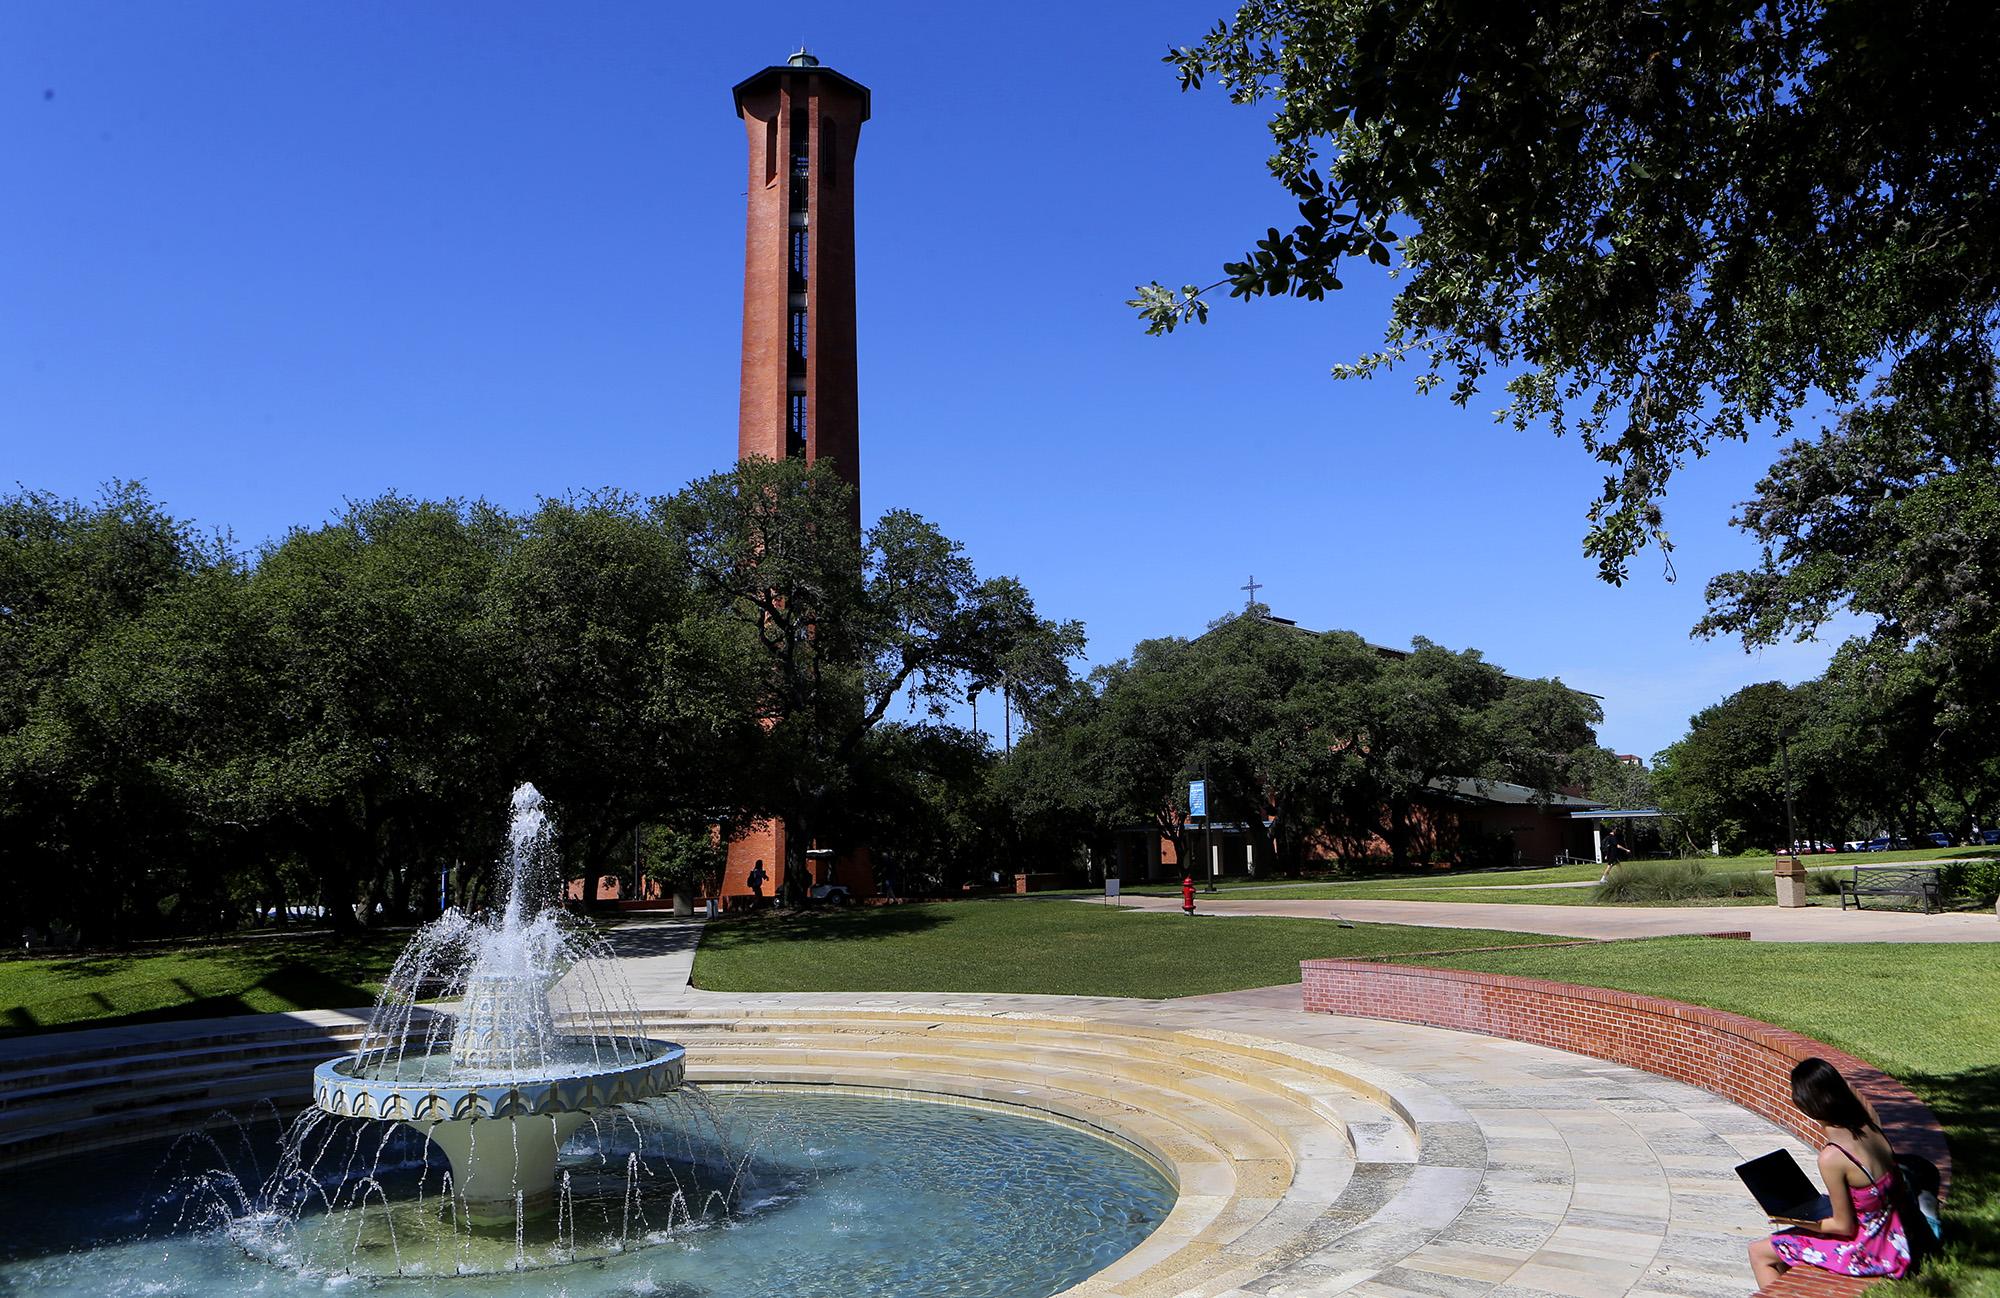 San Antonio's Trinity University ranked 3rd best in Texas, study says